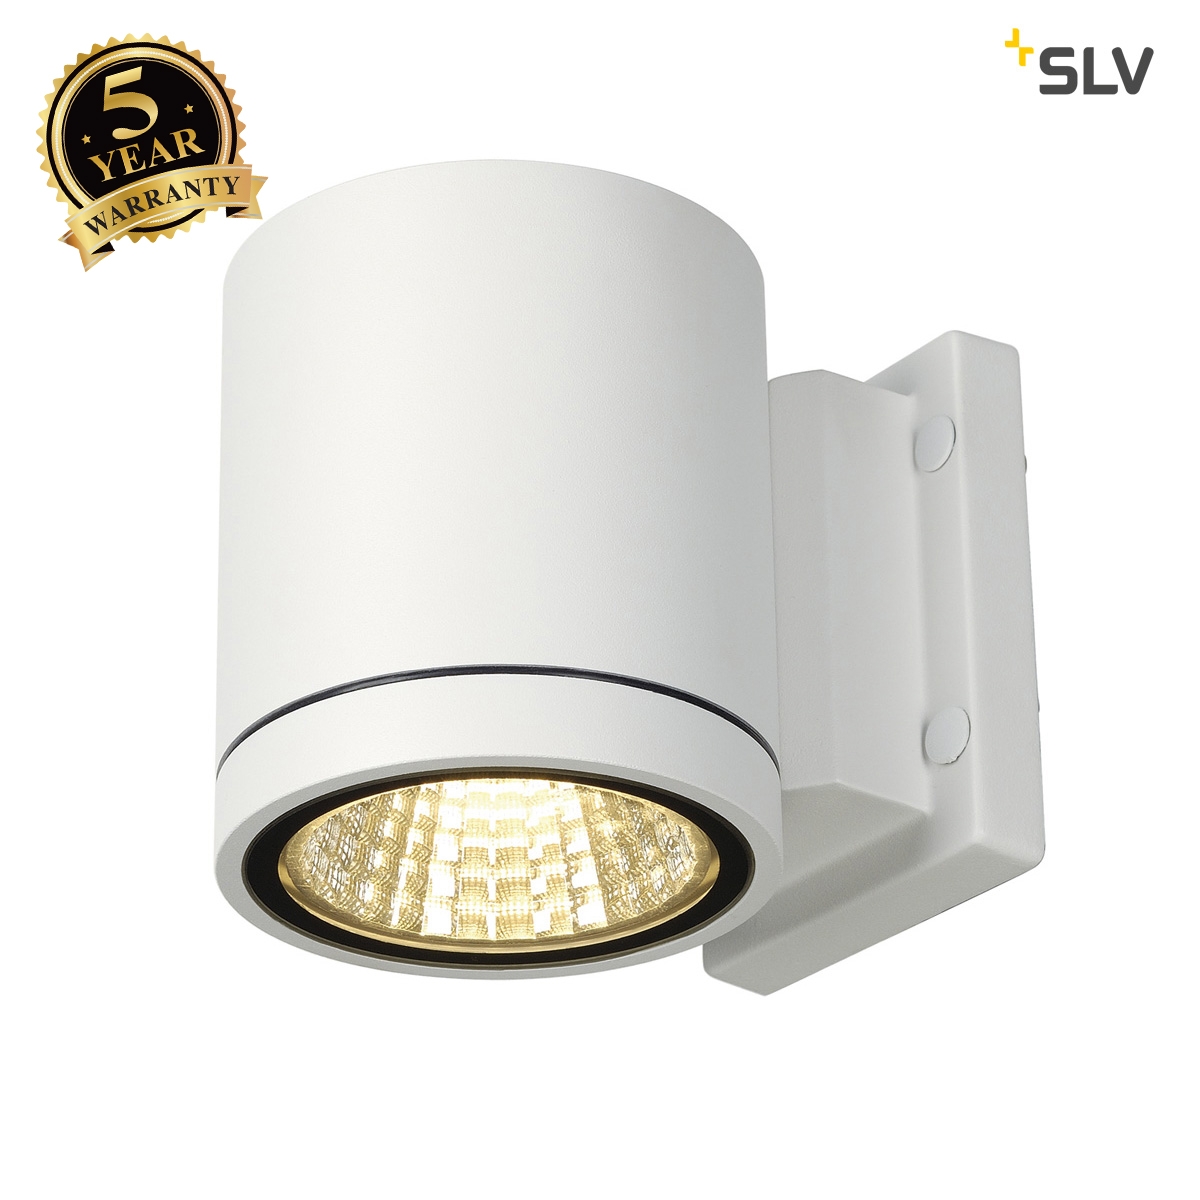 SLV ENOLA_C OUT WL wall light, round, white, 9W LED, 3000K, 35° 228511